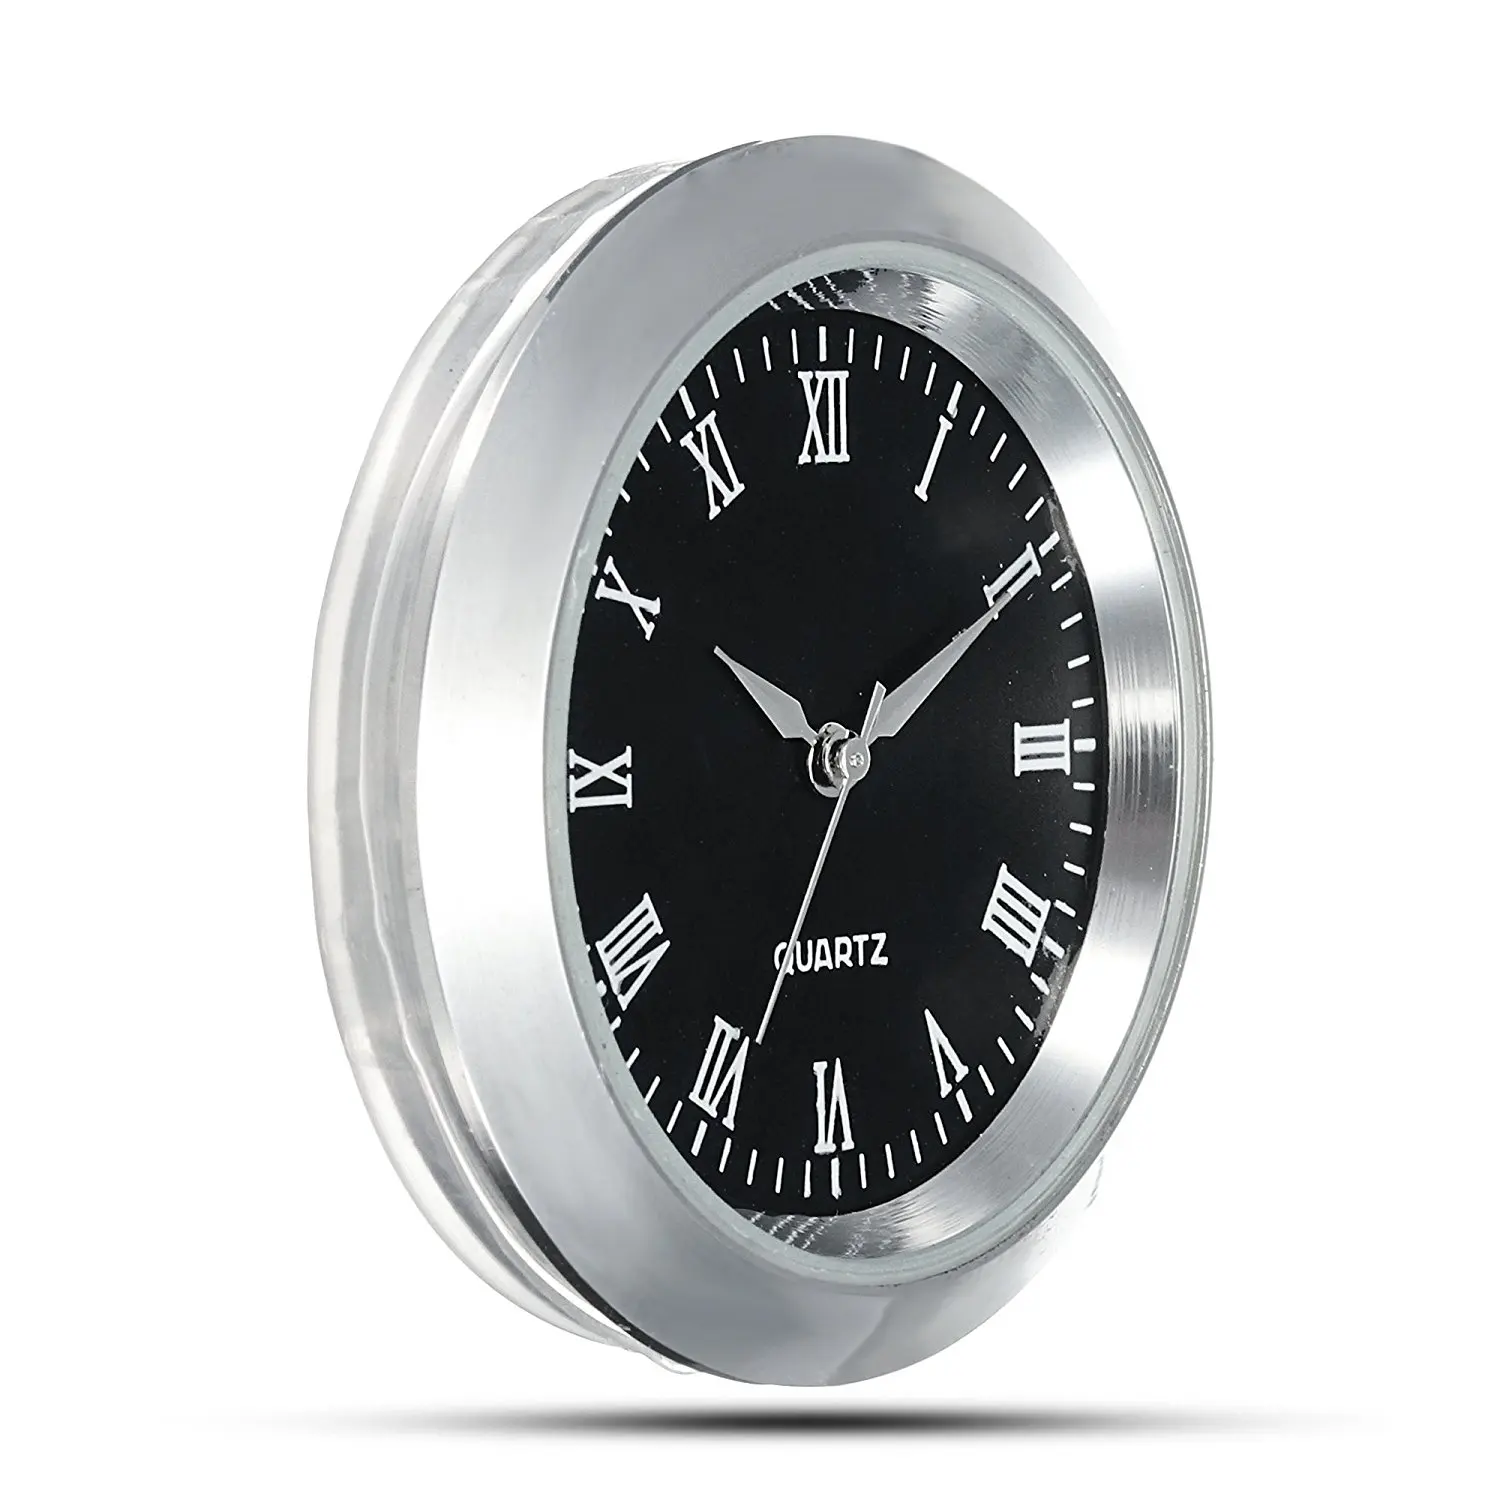 Mini Hygrometer 1-7/16 Clock Fitup